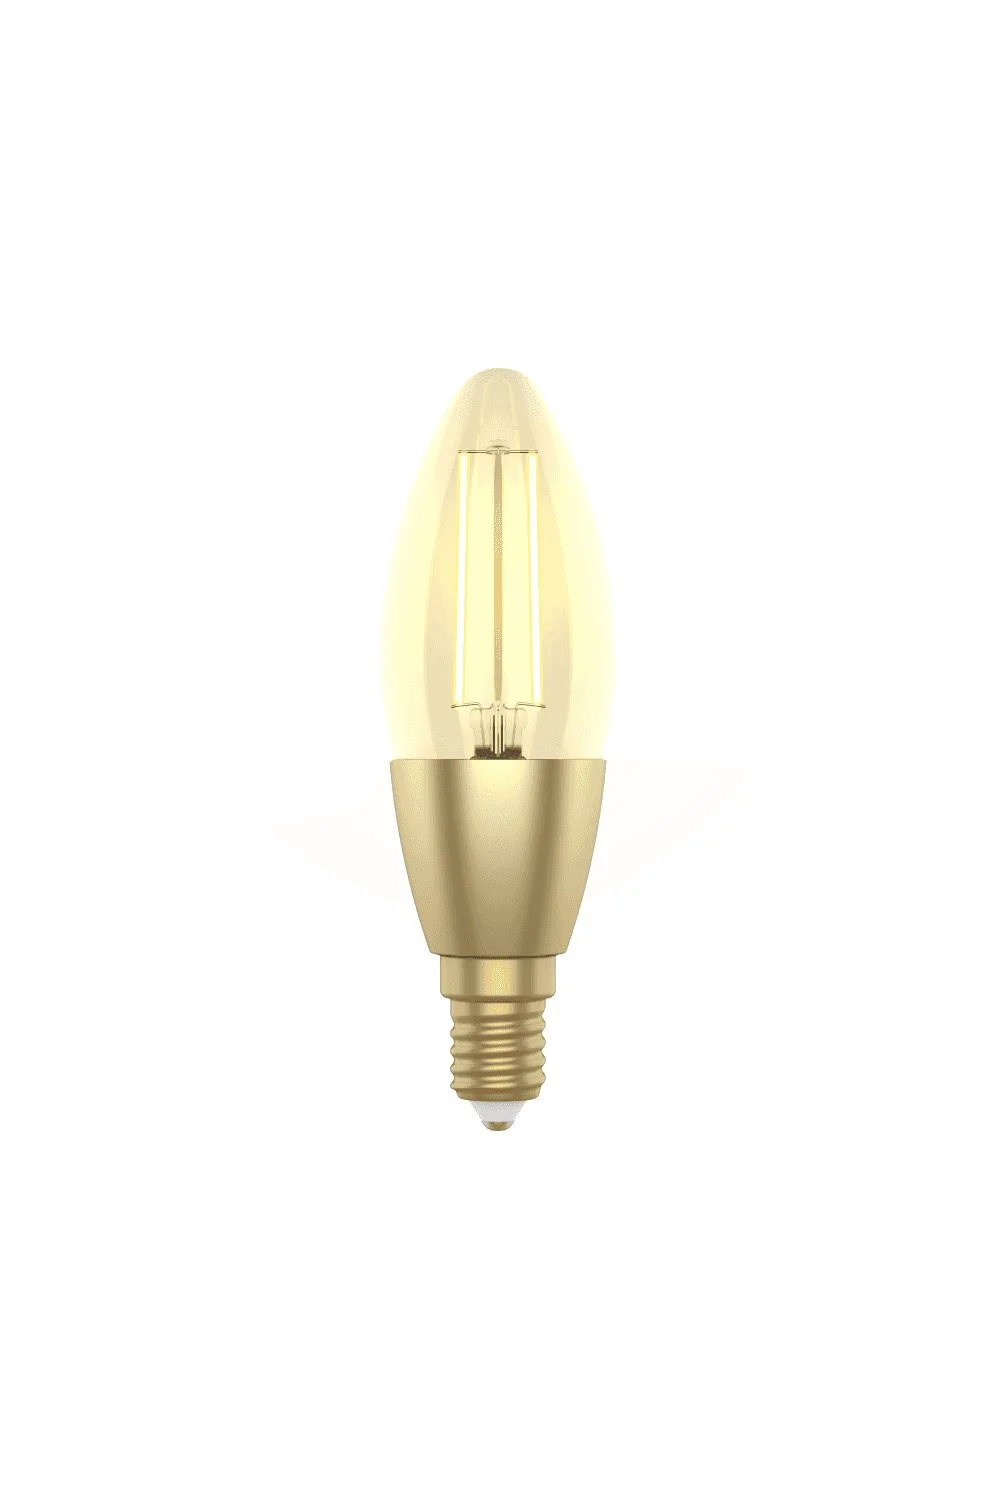 Woox смарт крушка Light - R5141 - WiFi Smart Filament Candle Blub E14 Type C37, 4.9W/50W, 470lm - image 2